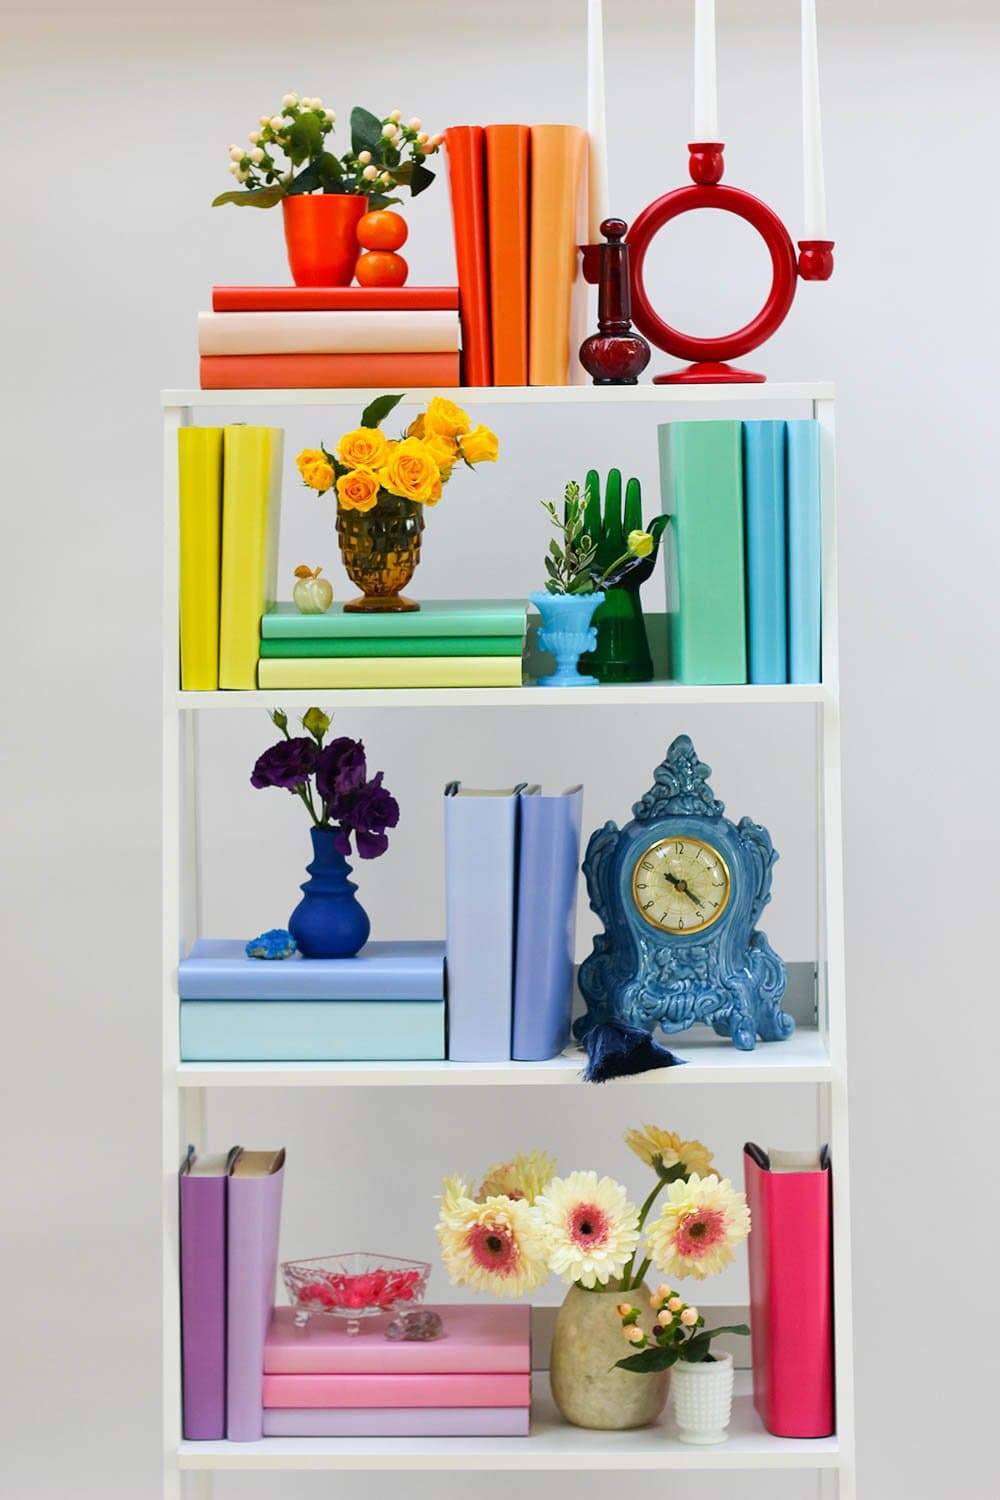 Styled rainbow book shelf with rainbow books from rainbow book covers  Edit alt text